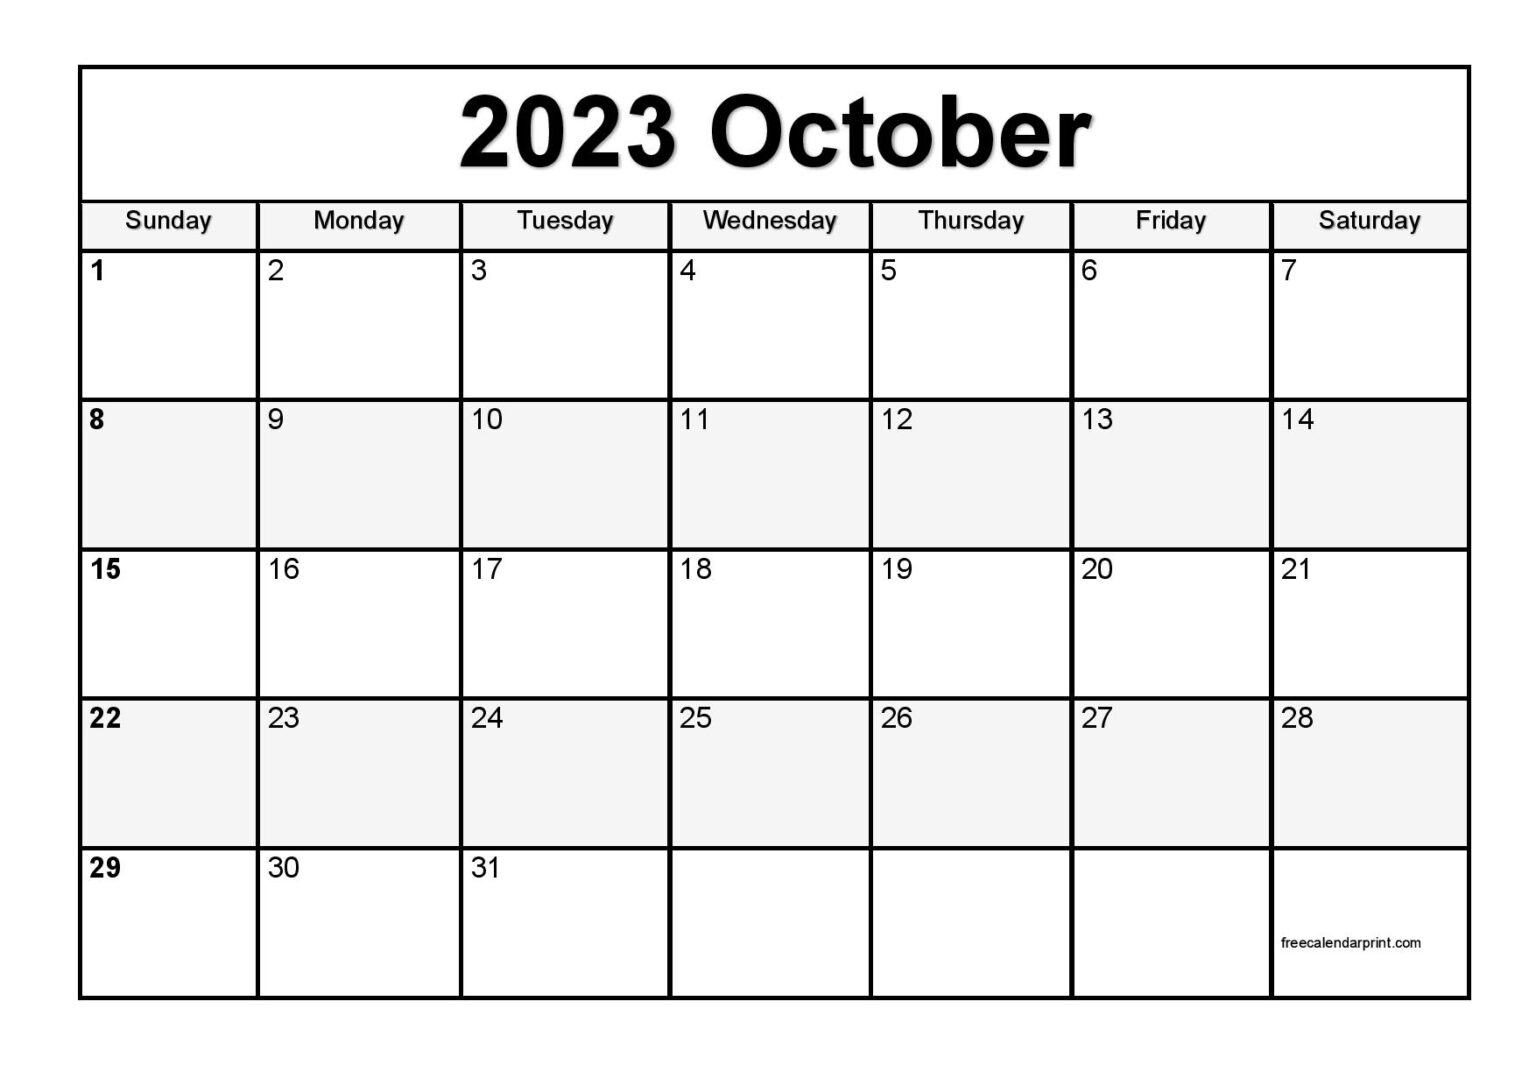 Editable Calendar Template October 2024